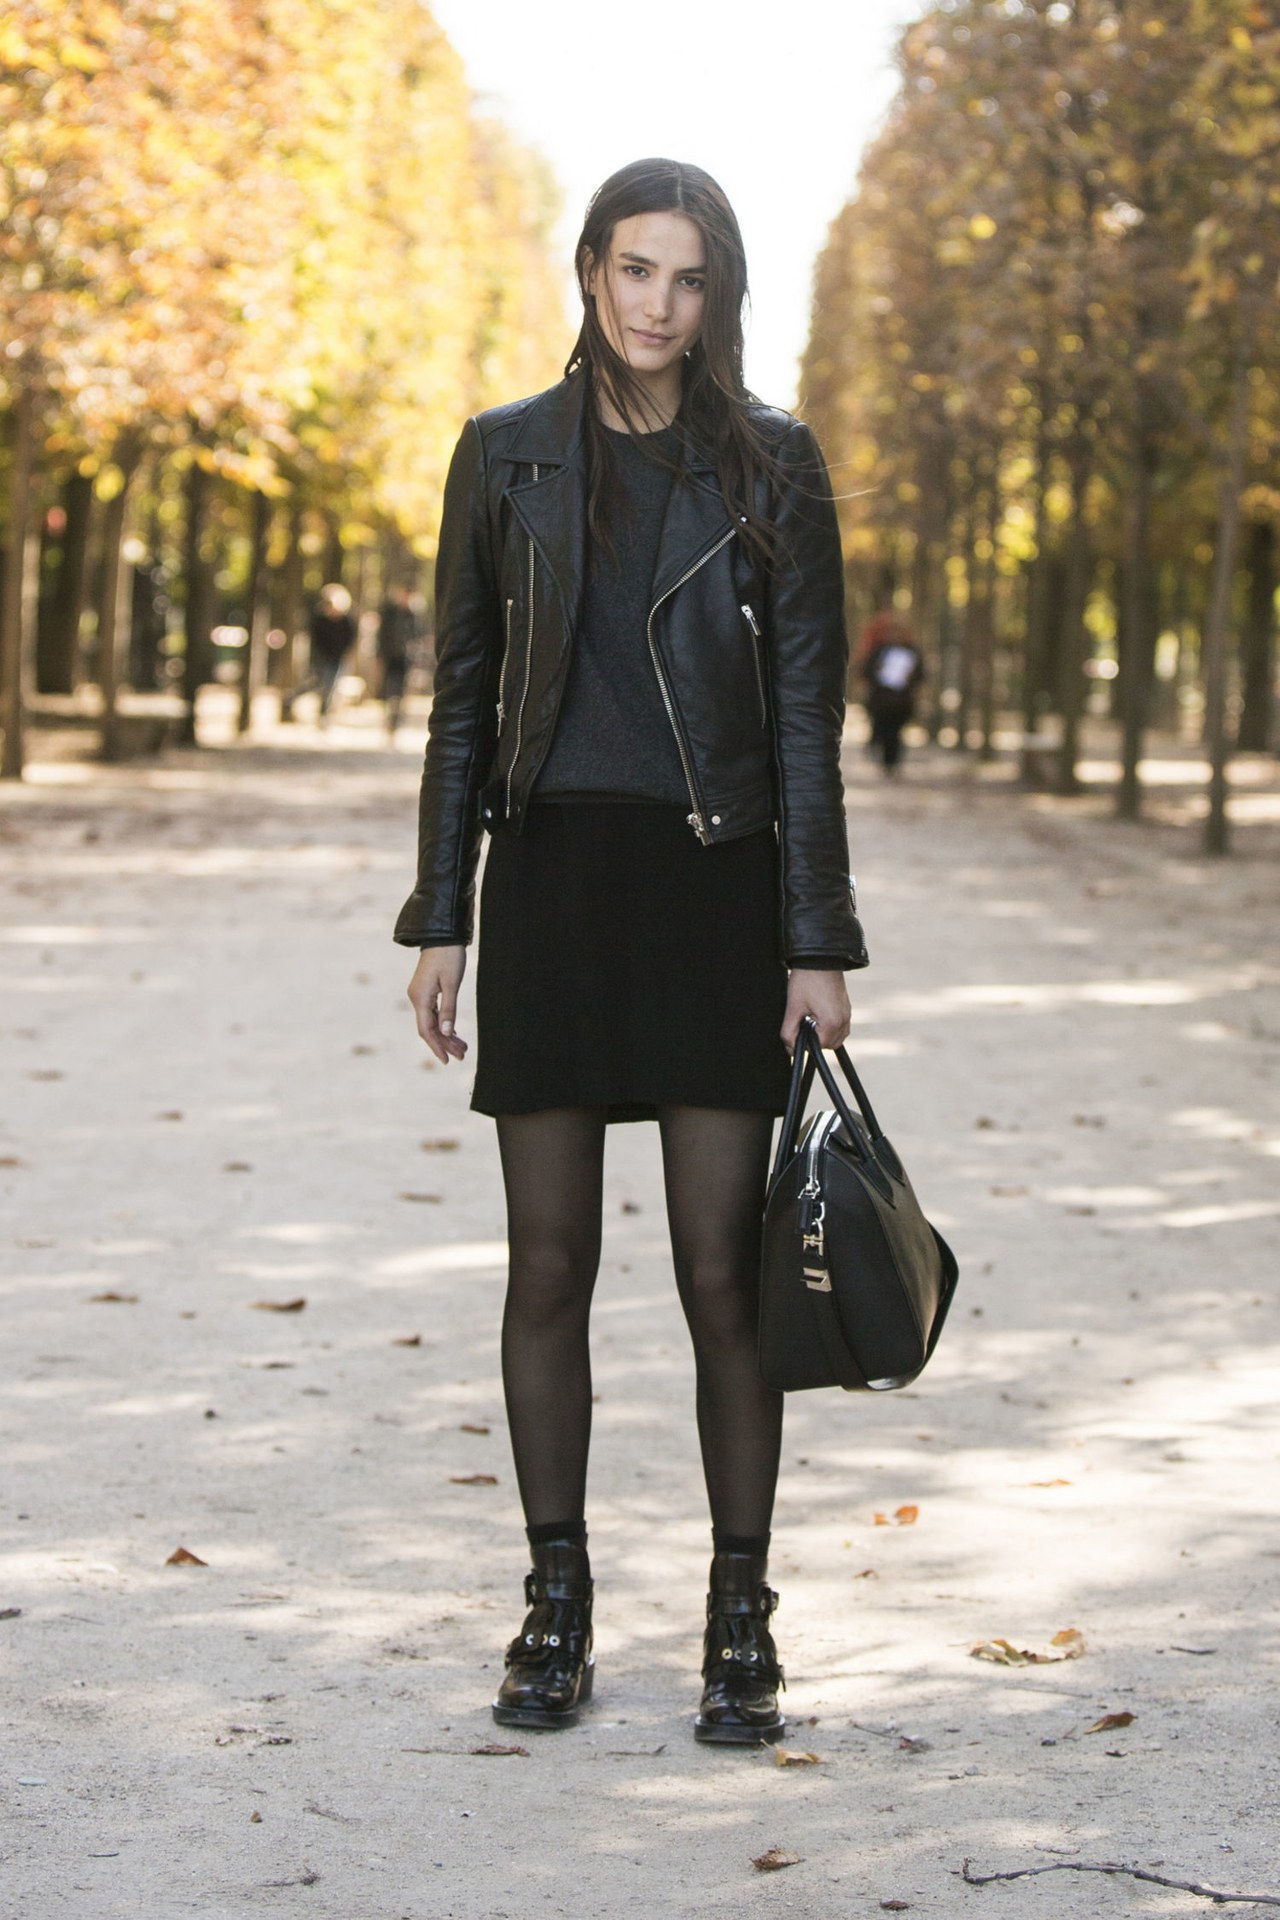 Knöchel booties black skirt leather jacket